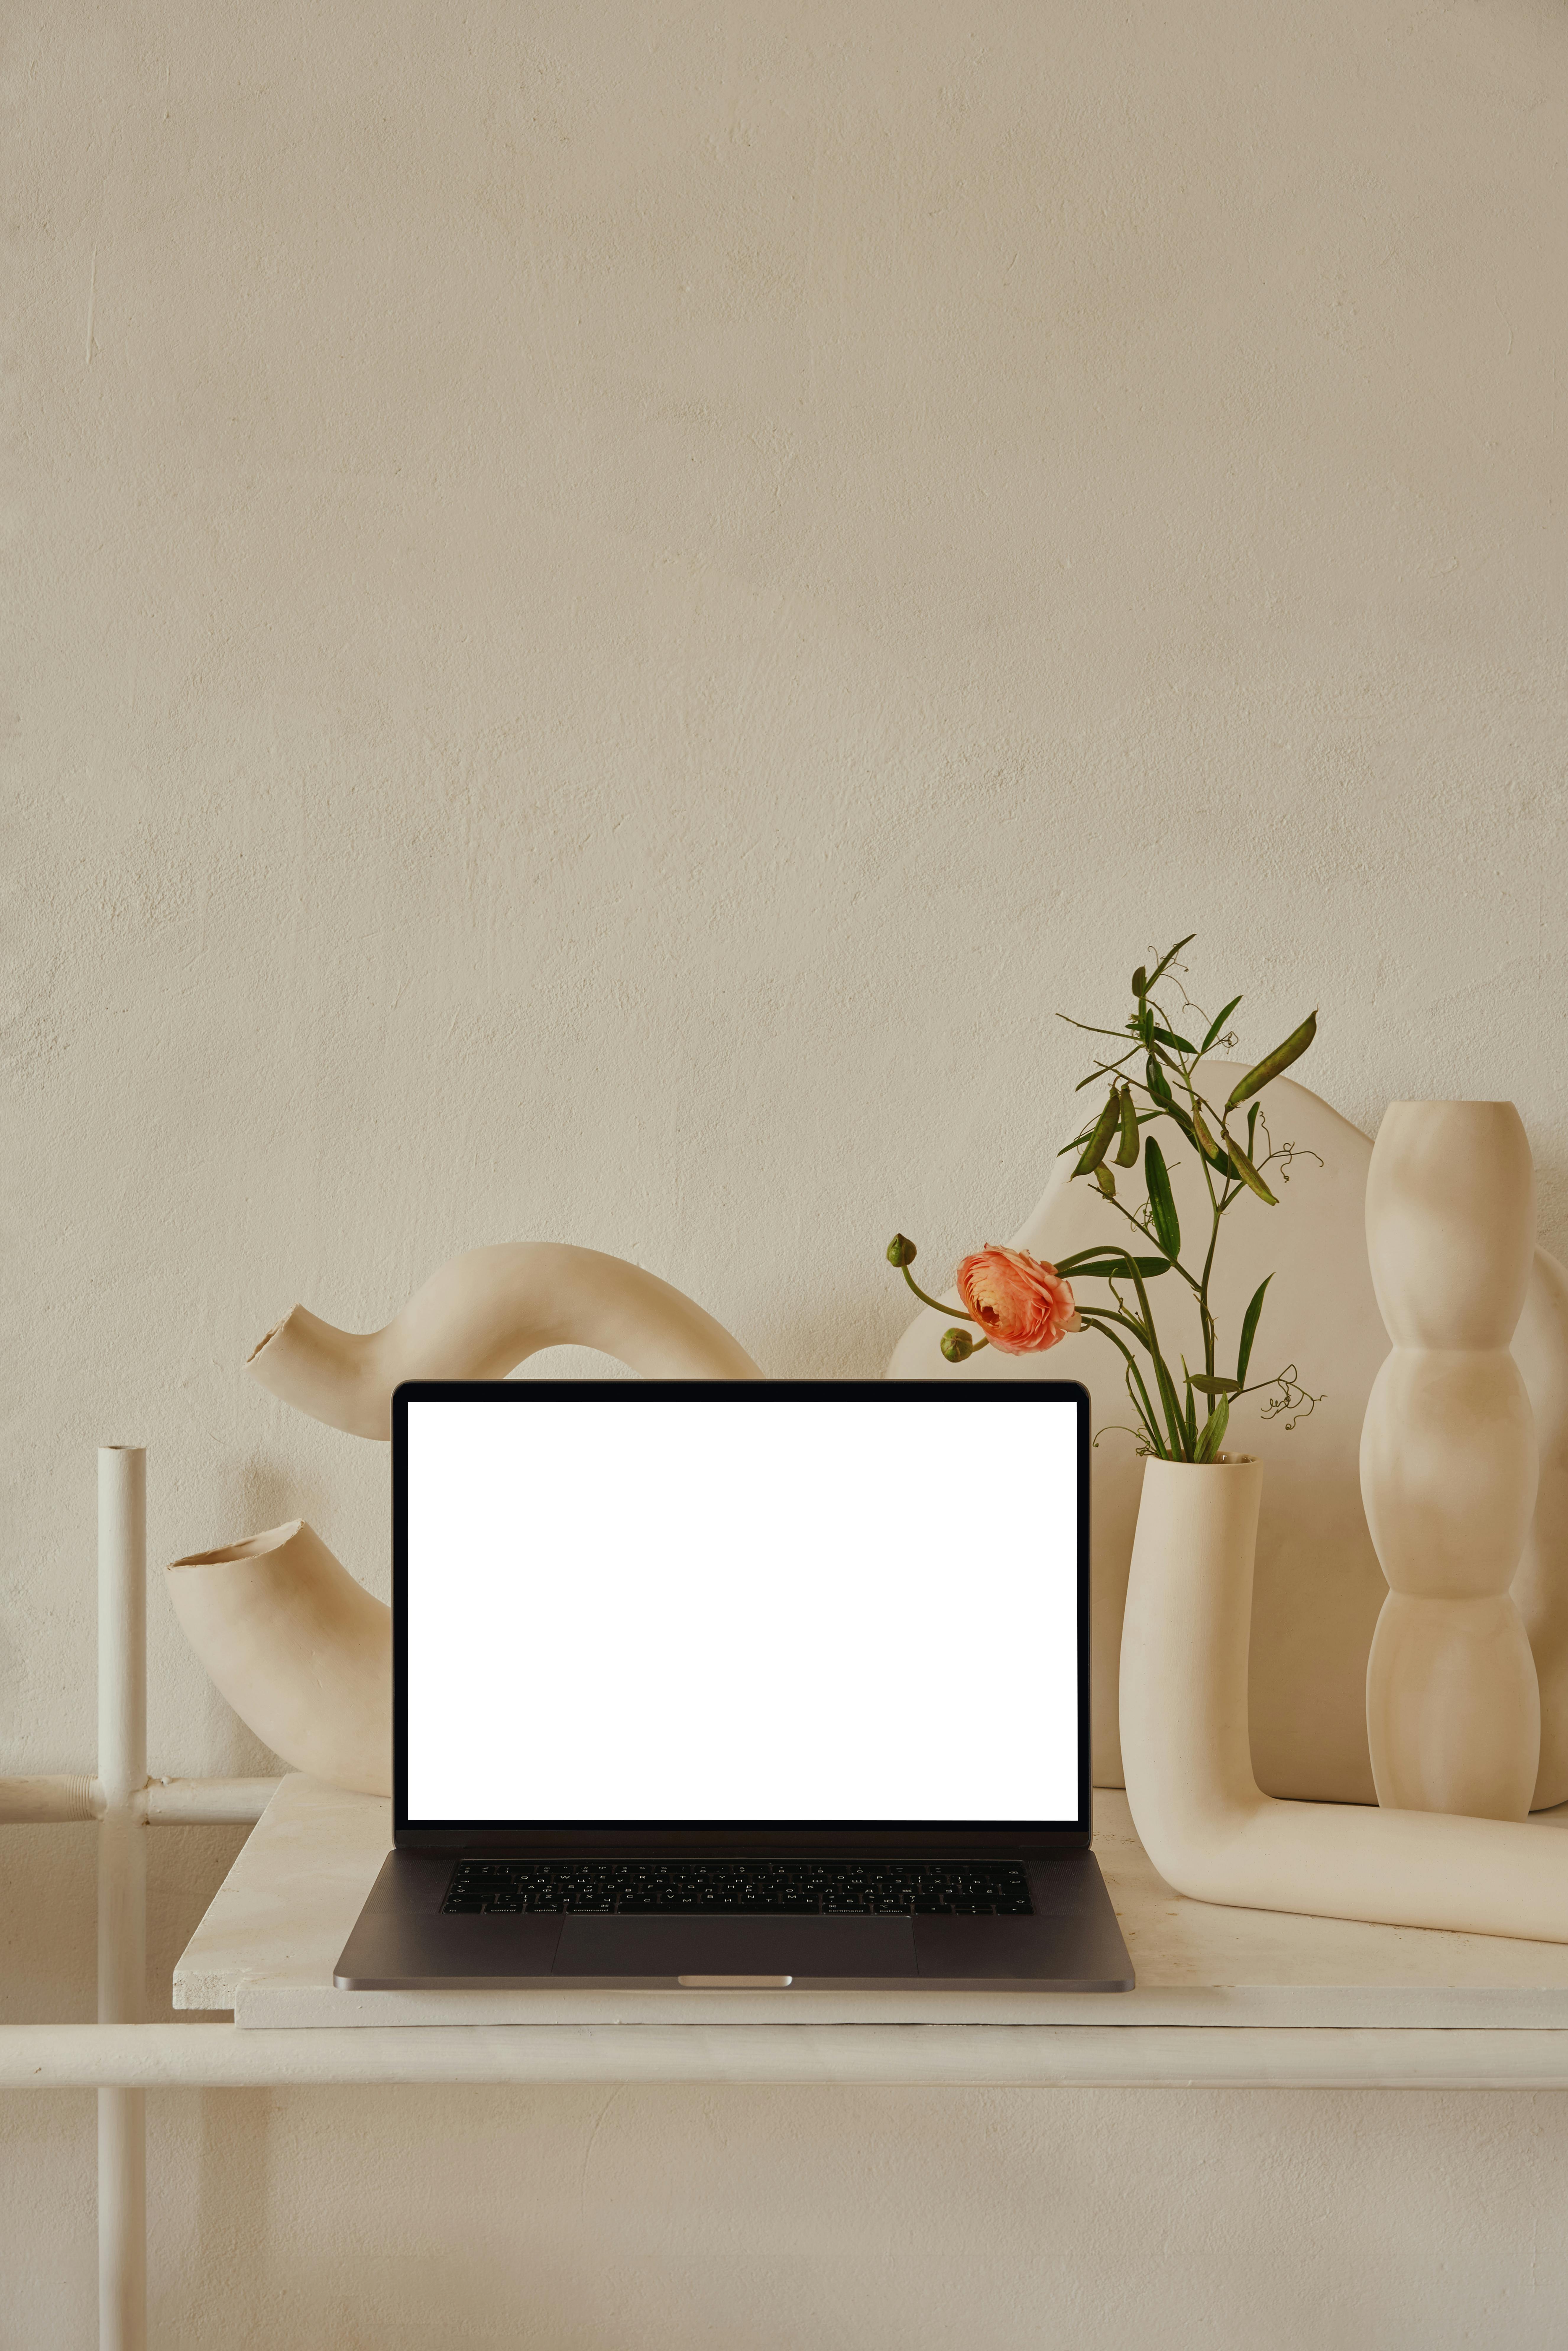 laptop on shelf near decorative ceramic vases with flowers